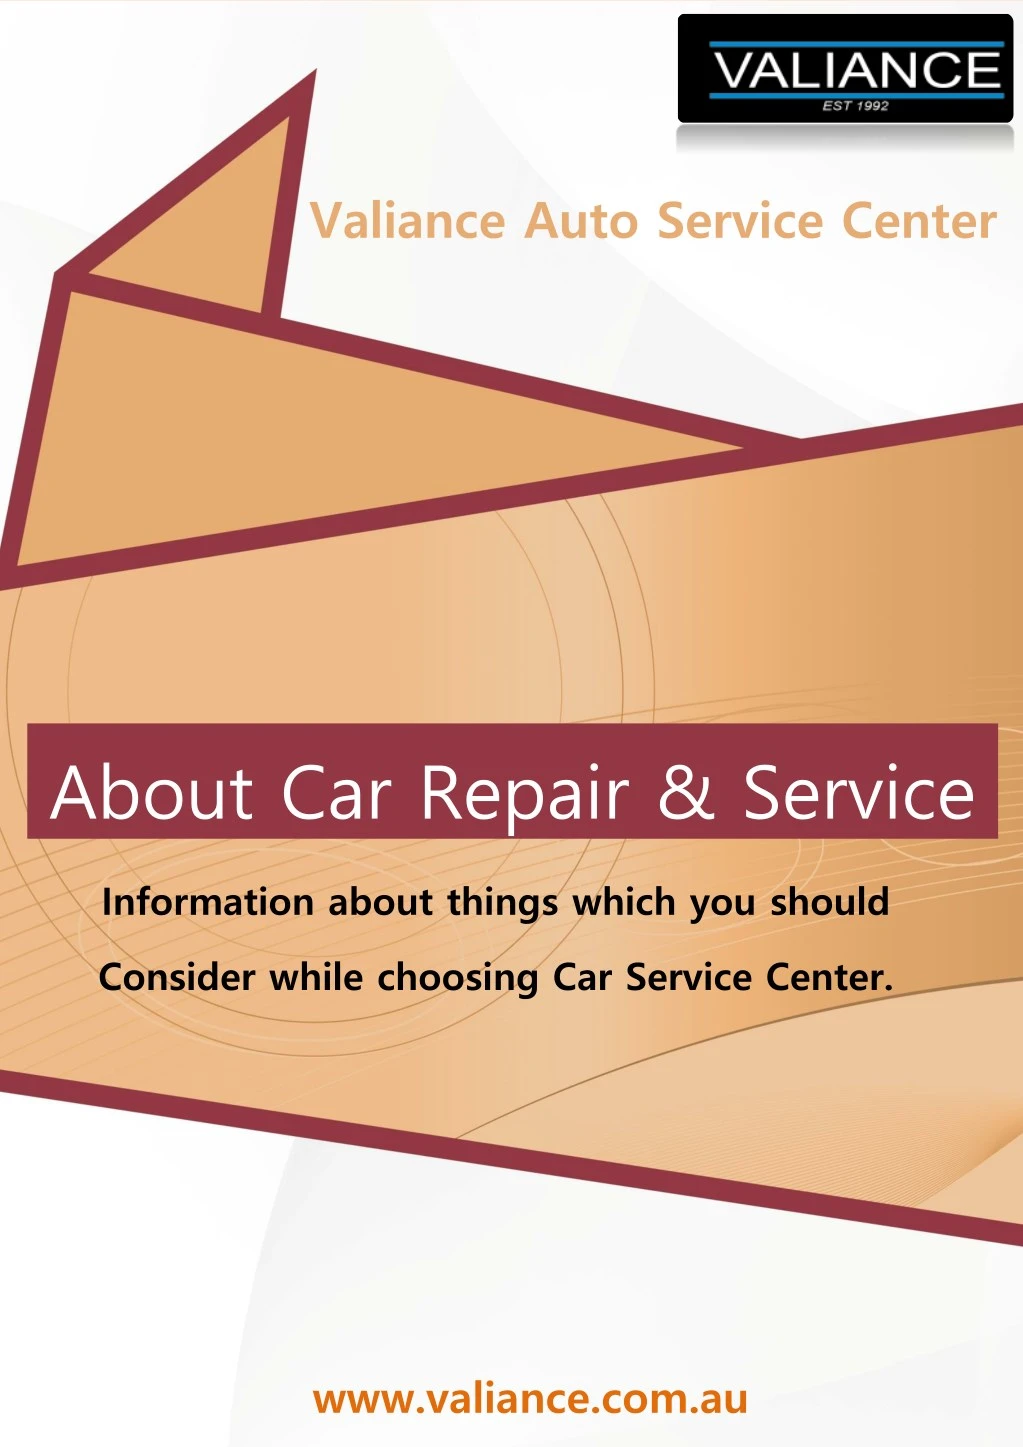 valiance auto service center